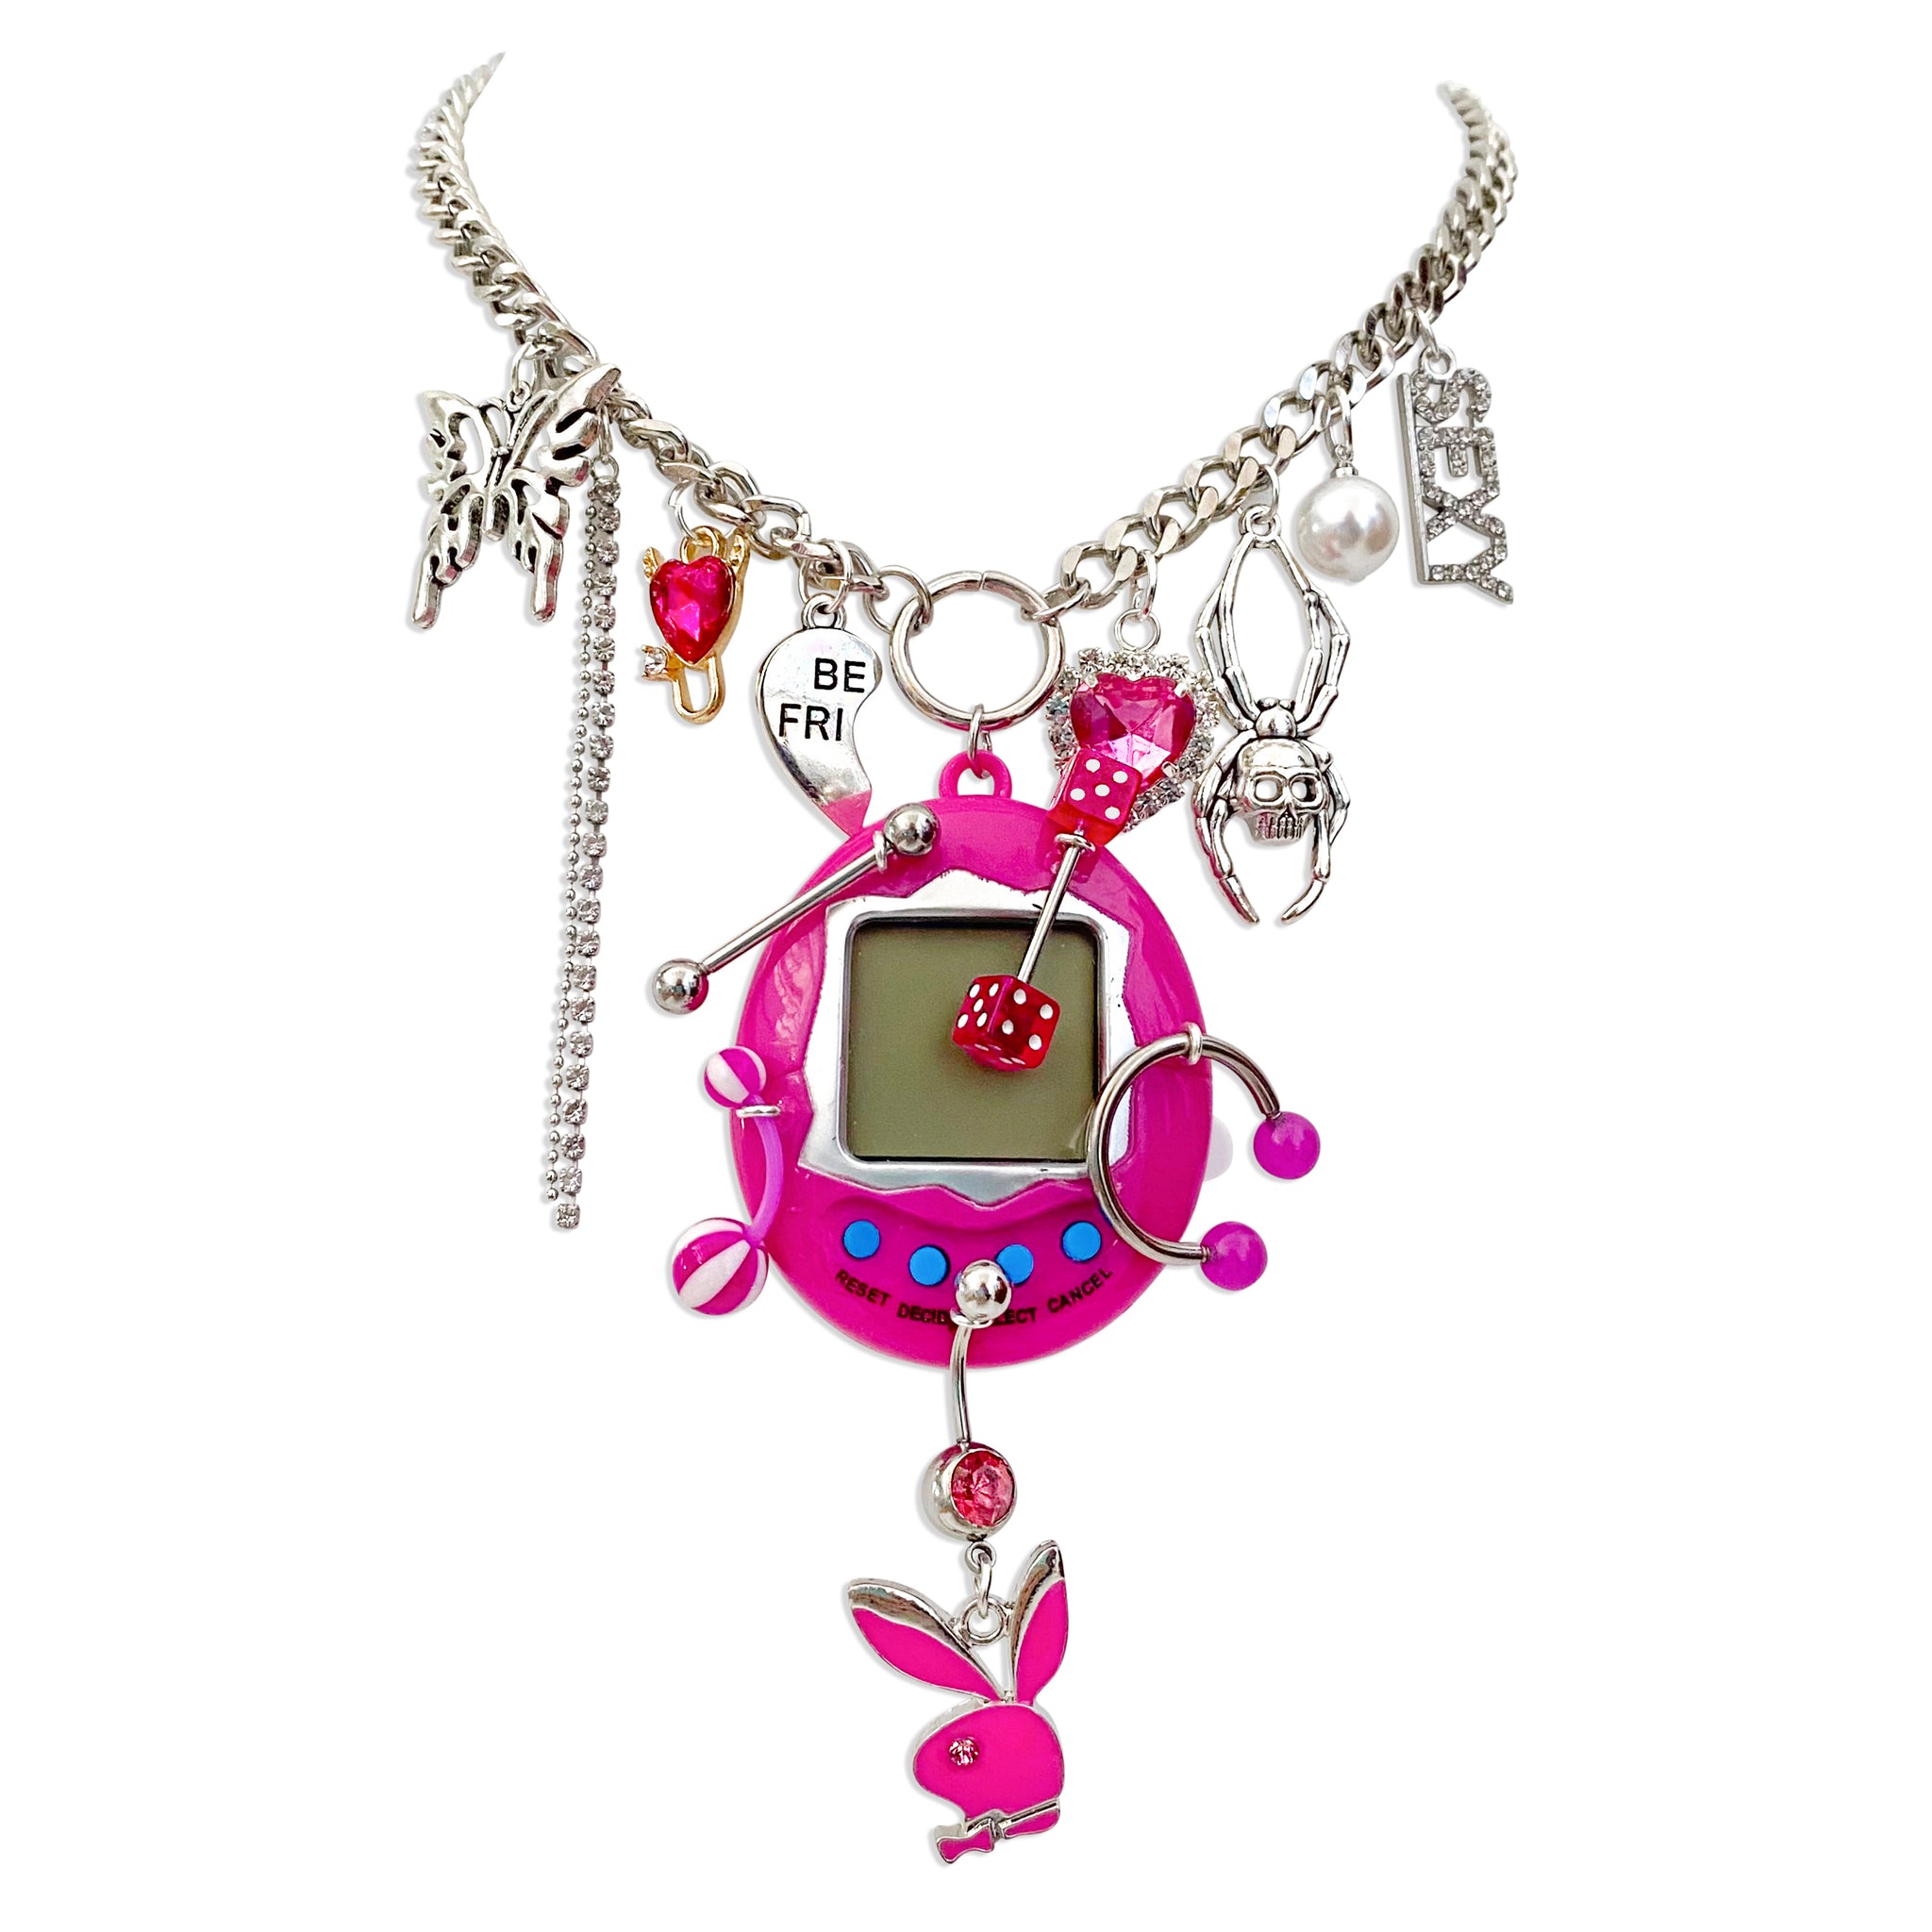 Pink Pierced N' Charmed Cyber Pet Necklace